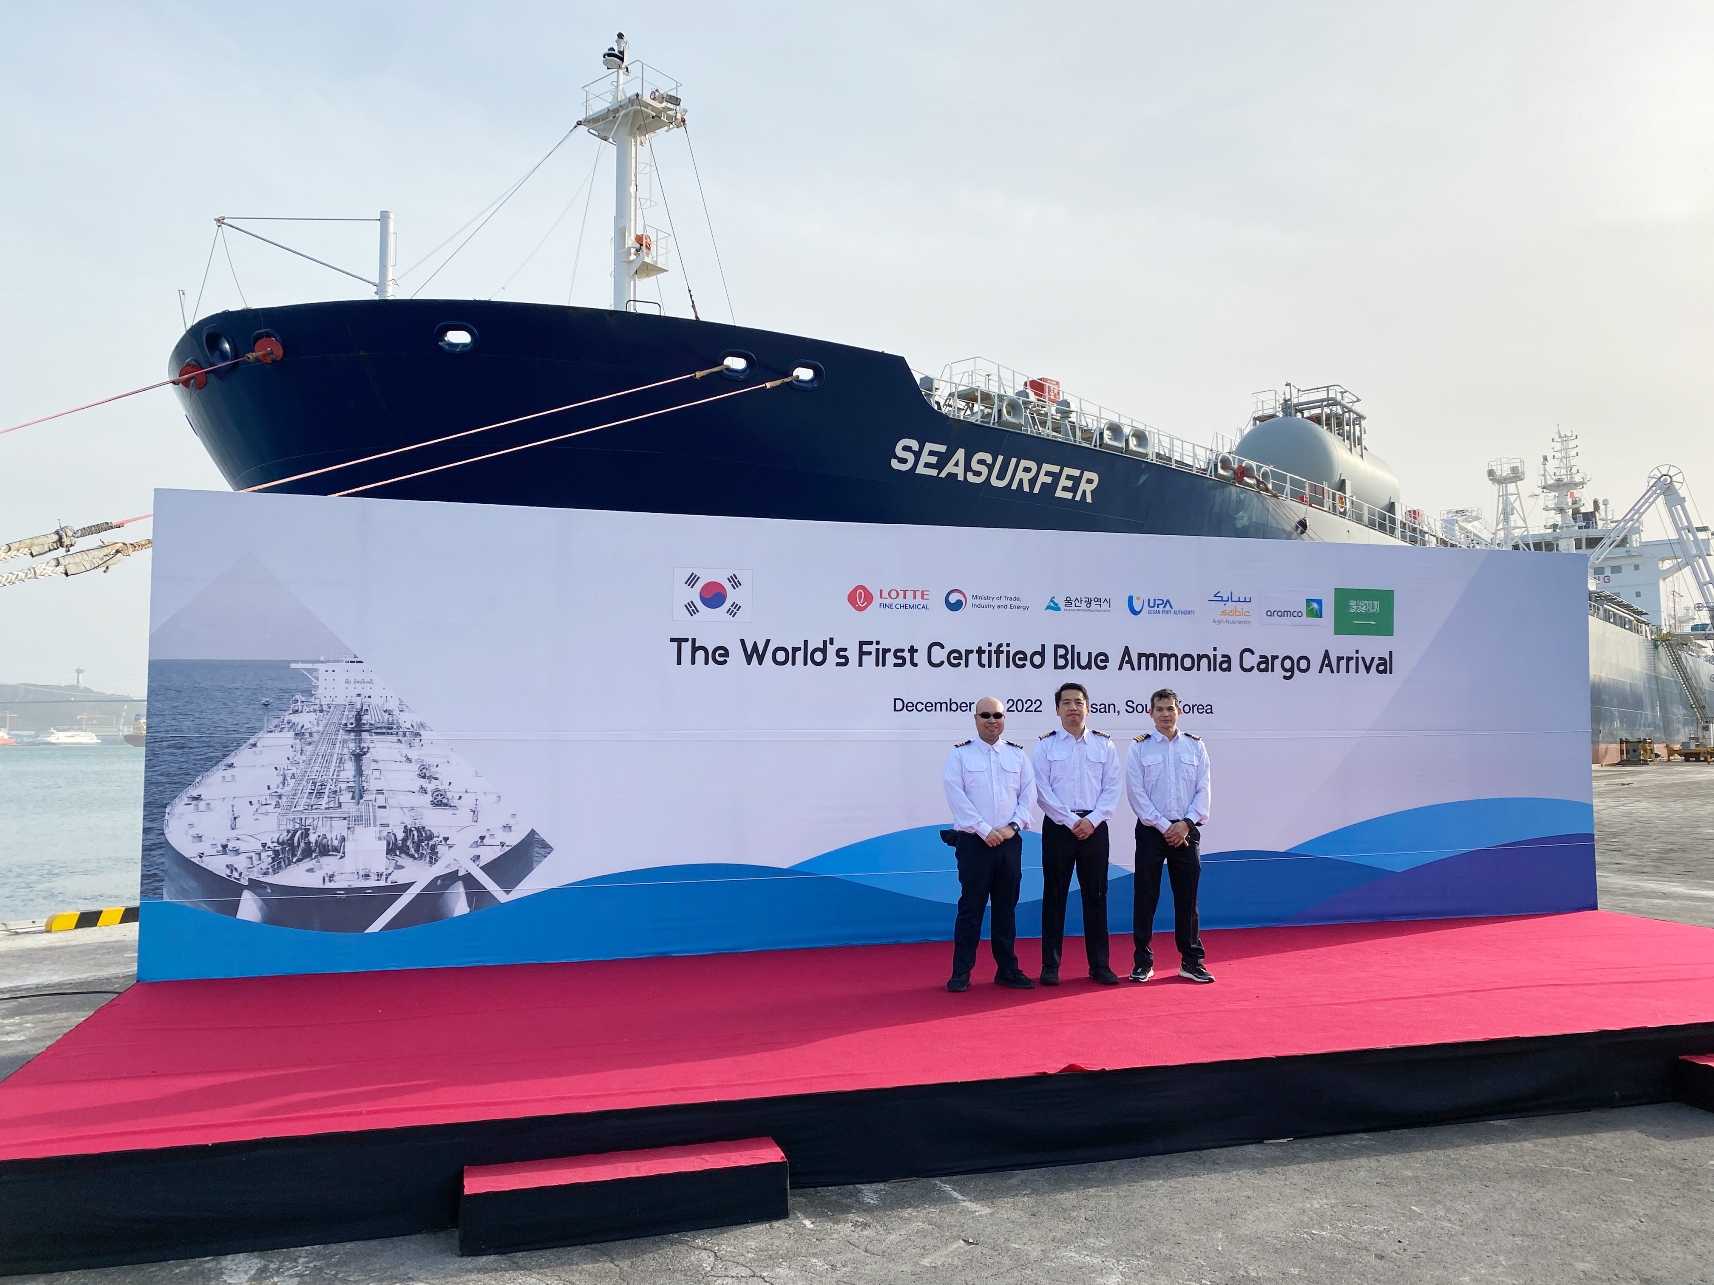 Thenamaris’ SEASURFER delivers world’s first cargo of blue ammonia